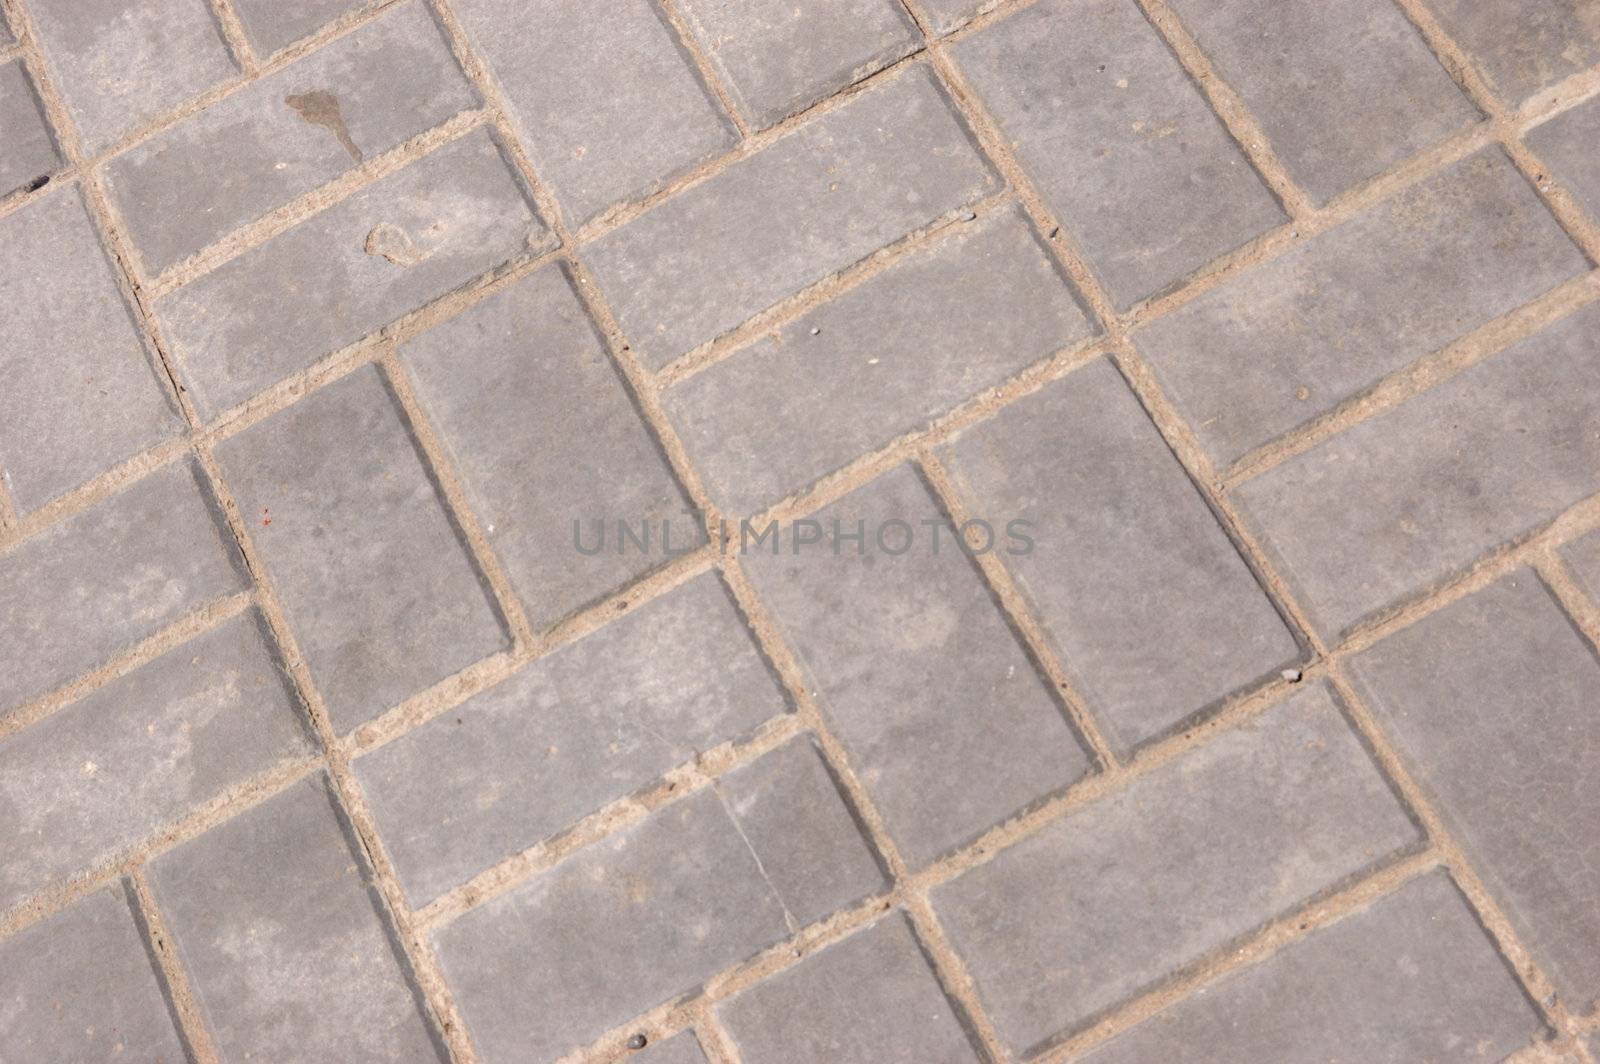 close-up of new pavement of stoneblocks (bricks) of grey color